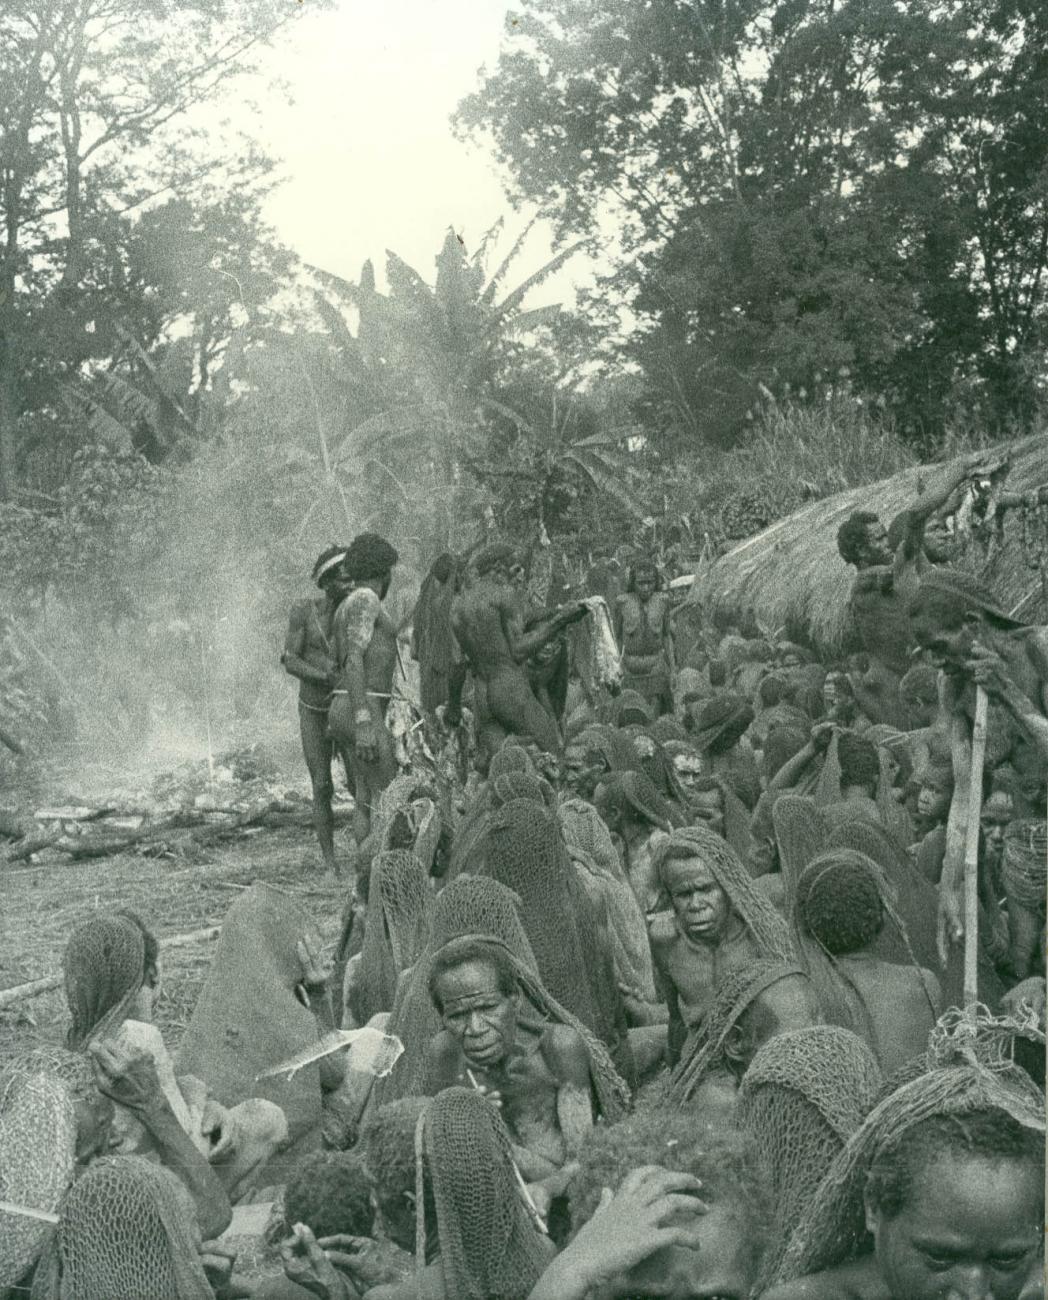 BD/40/71 - 
Mountainland inhabitants during pig feast
